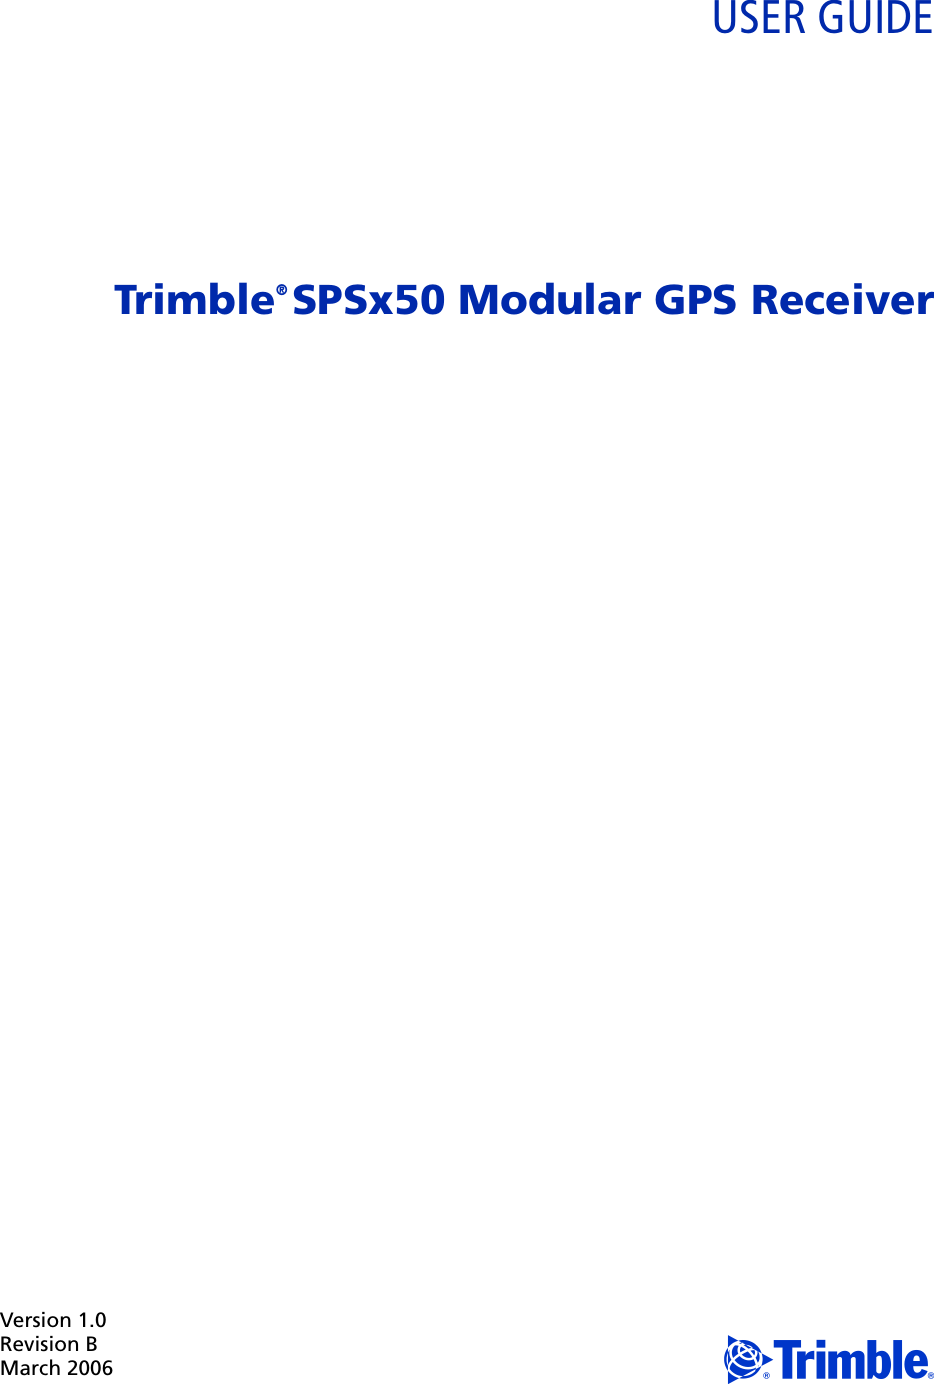 Version 1.0Revision BMarch 2006 USER GUIDETrimble® SPSx50 Modular GPS Receiver